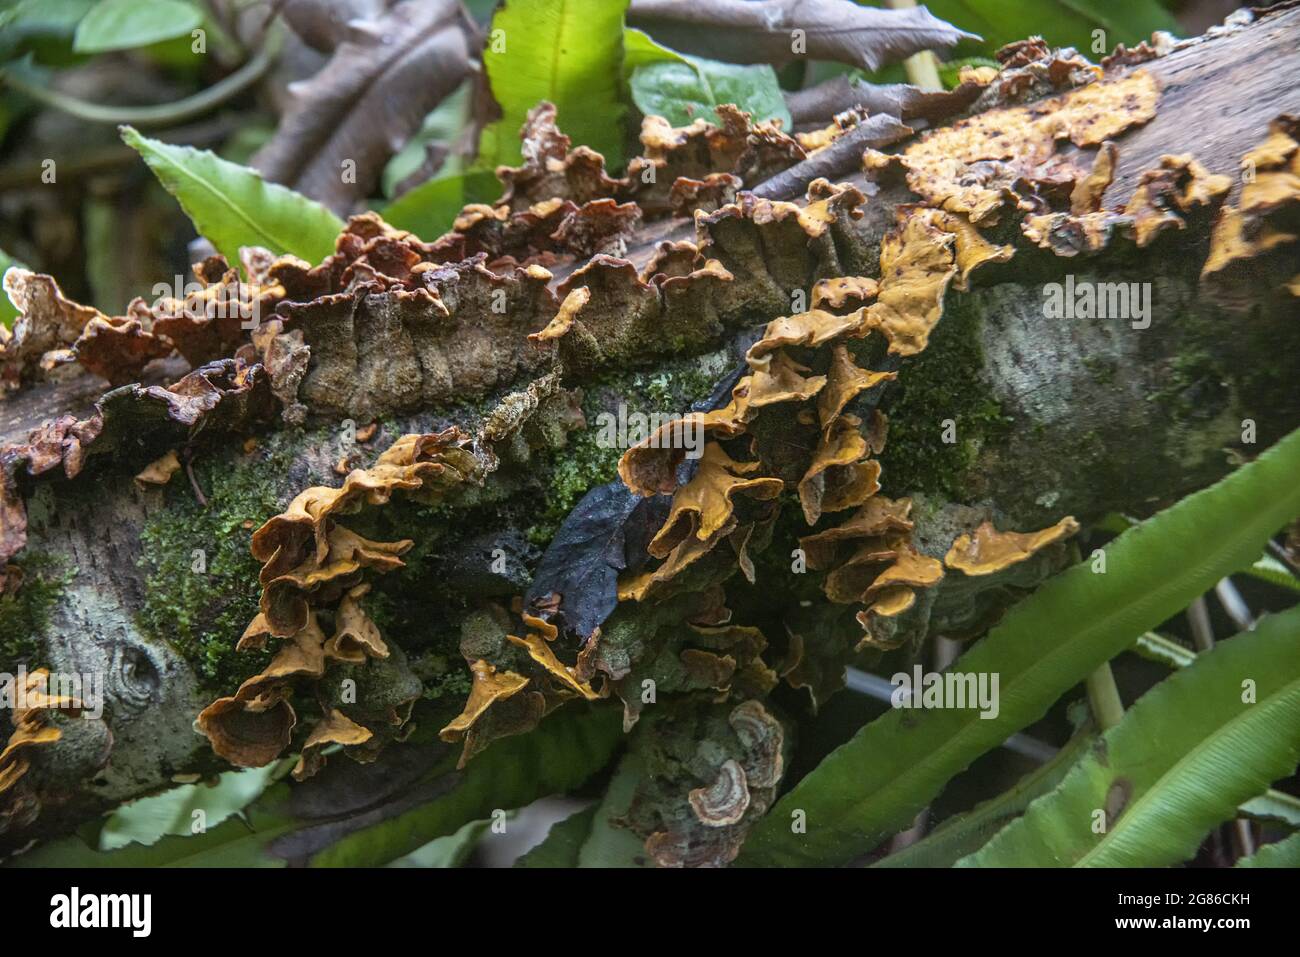 Closeup shot of growing Hymenochaete mushrooms on a tree bark Stock Photo